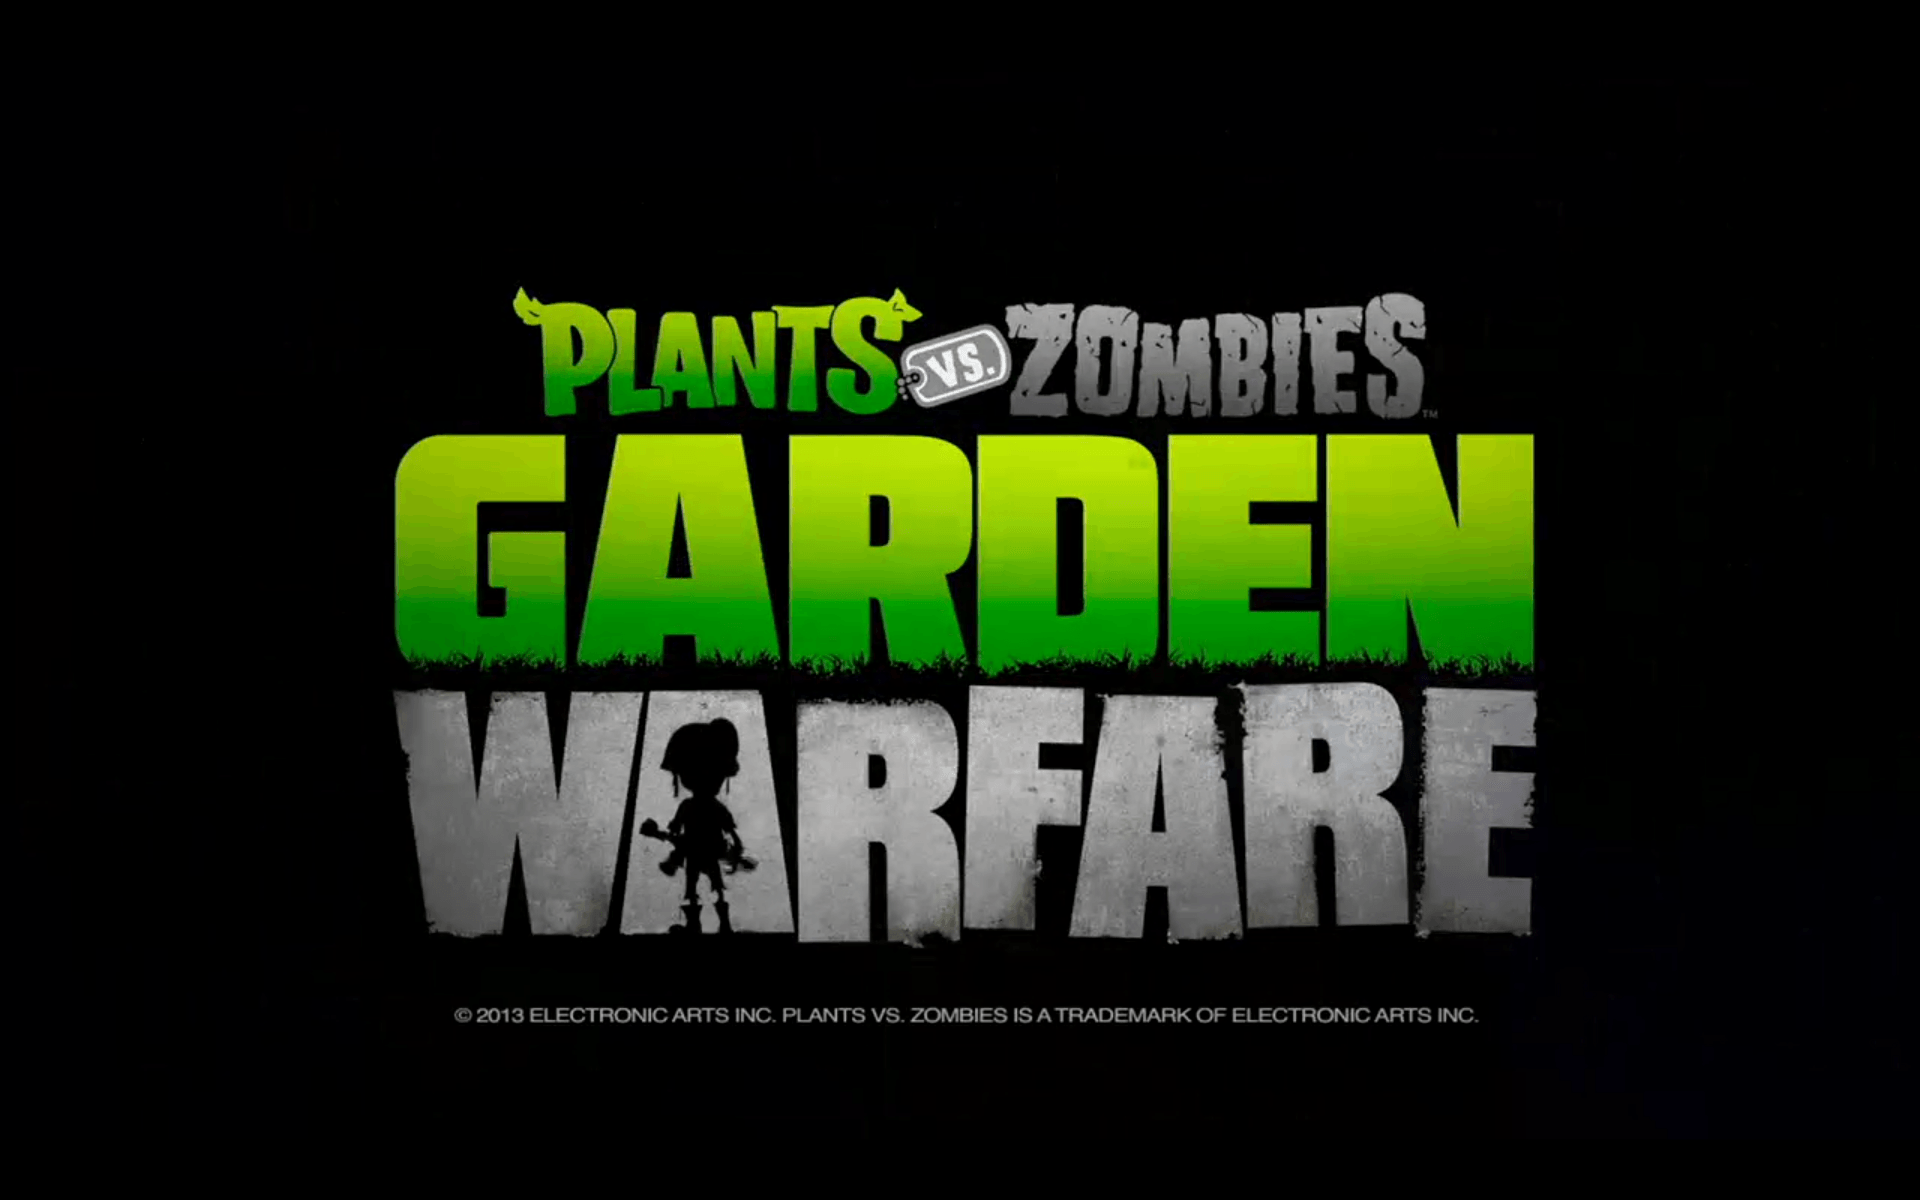 Plants vs. Zombies 2014 New Garden Warfare « Game Wallpaper HDGame